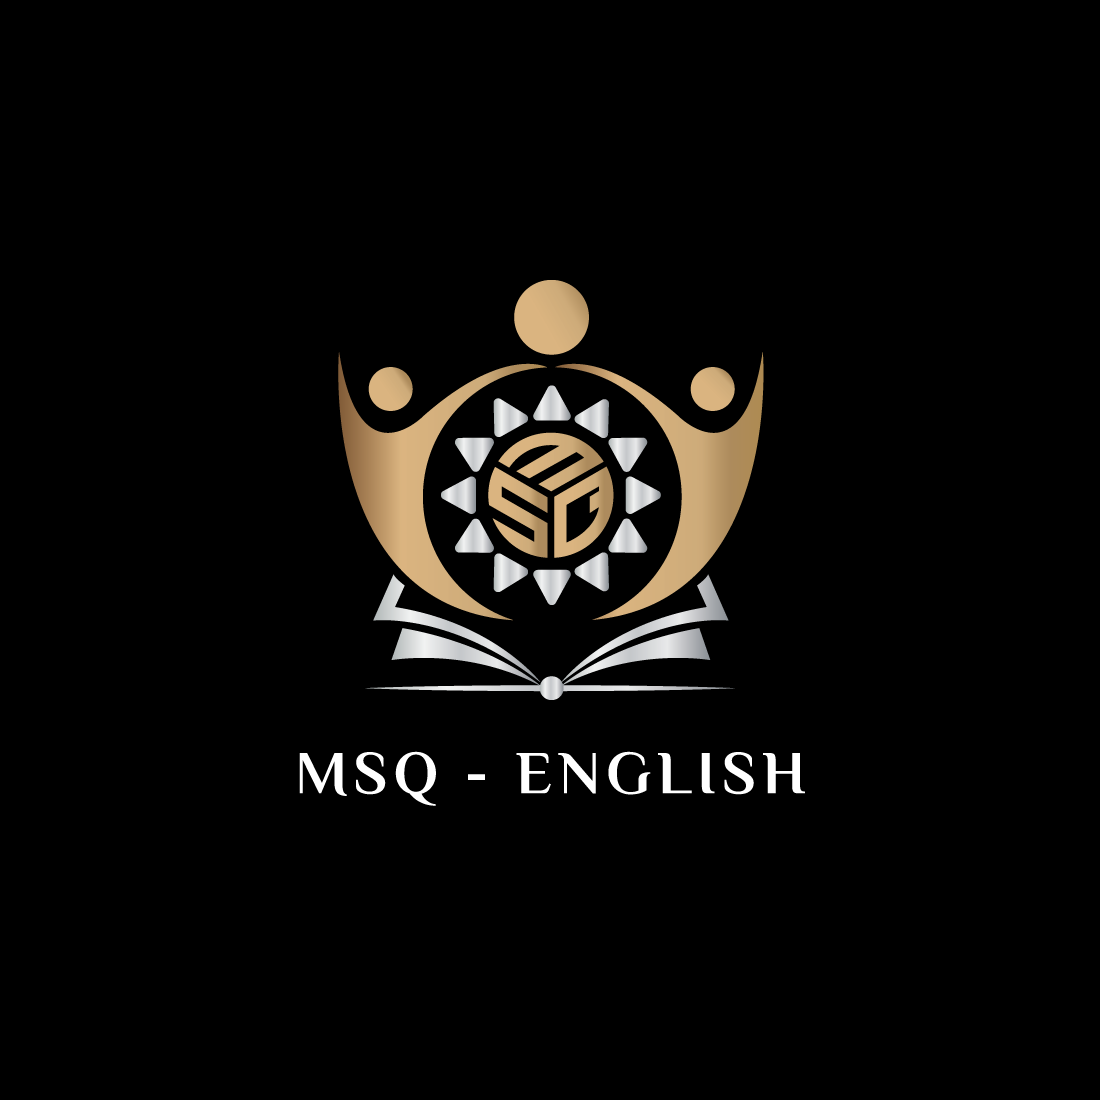 MSQ LOGO preview image.